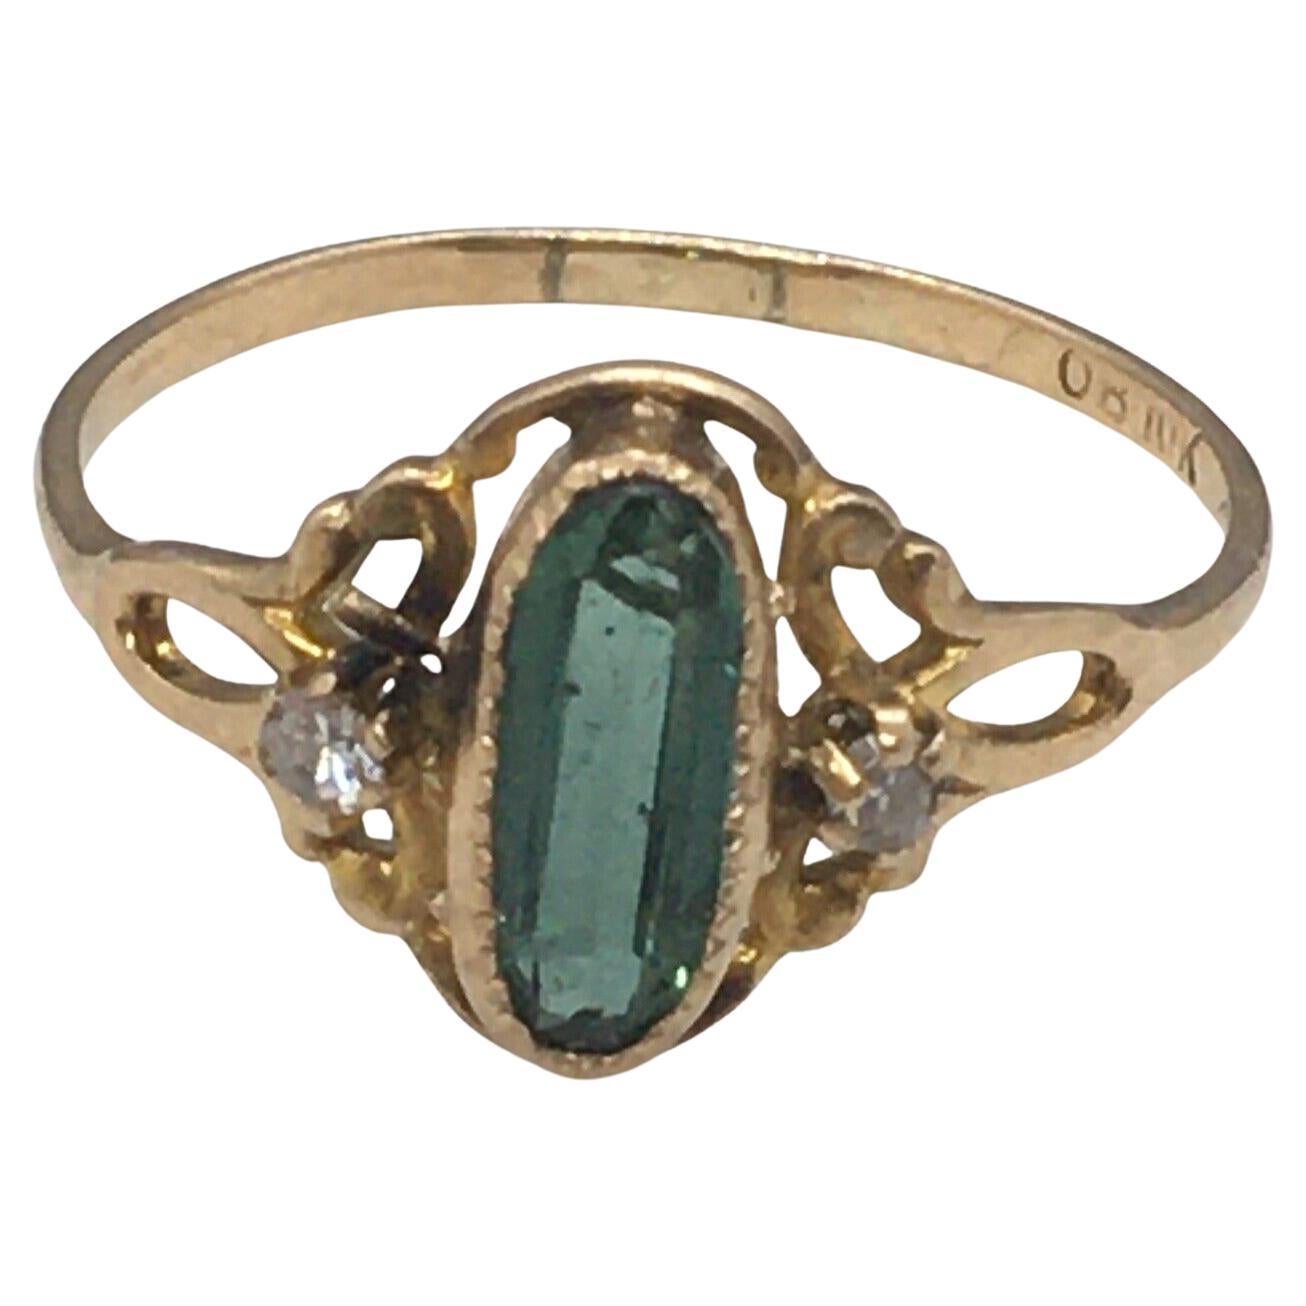 Art Deco 10K Gold Green Tourmaline Single Cut Diamond Ring Ostby Barton 1920s